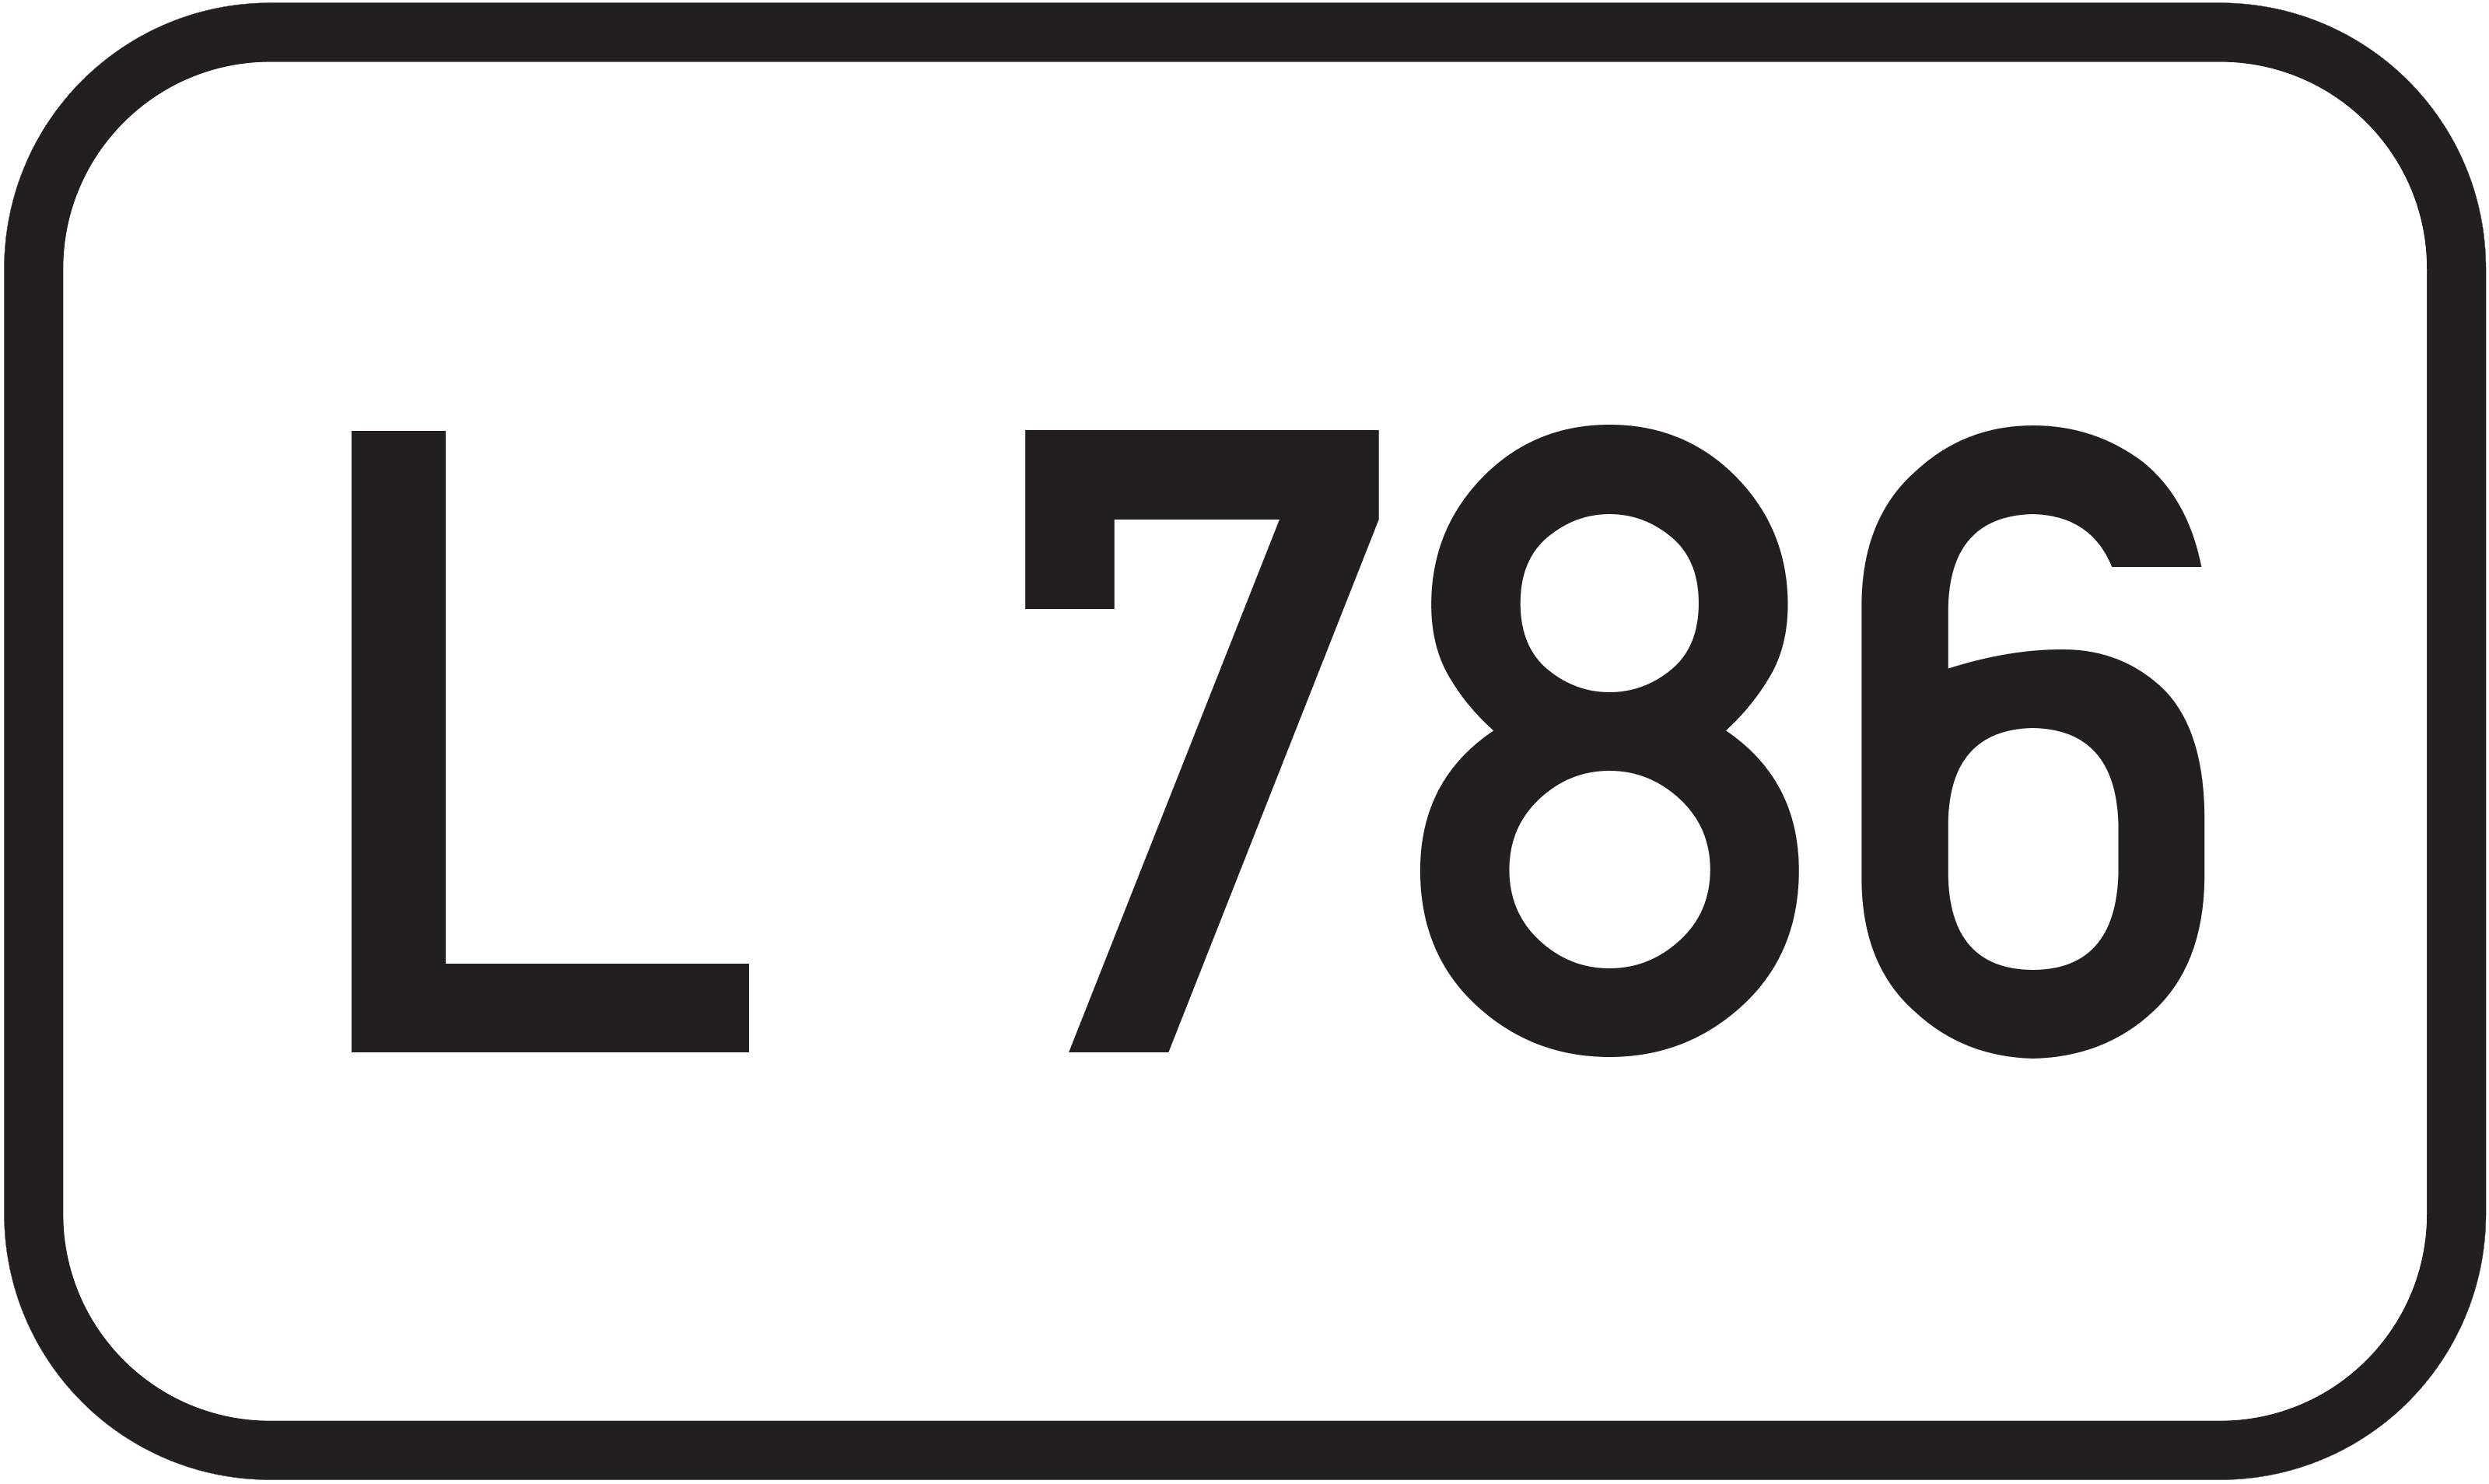 Straßenschild Landesstraße L 786